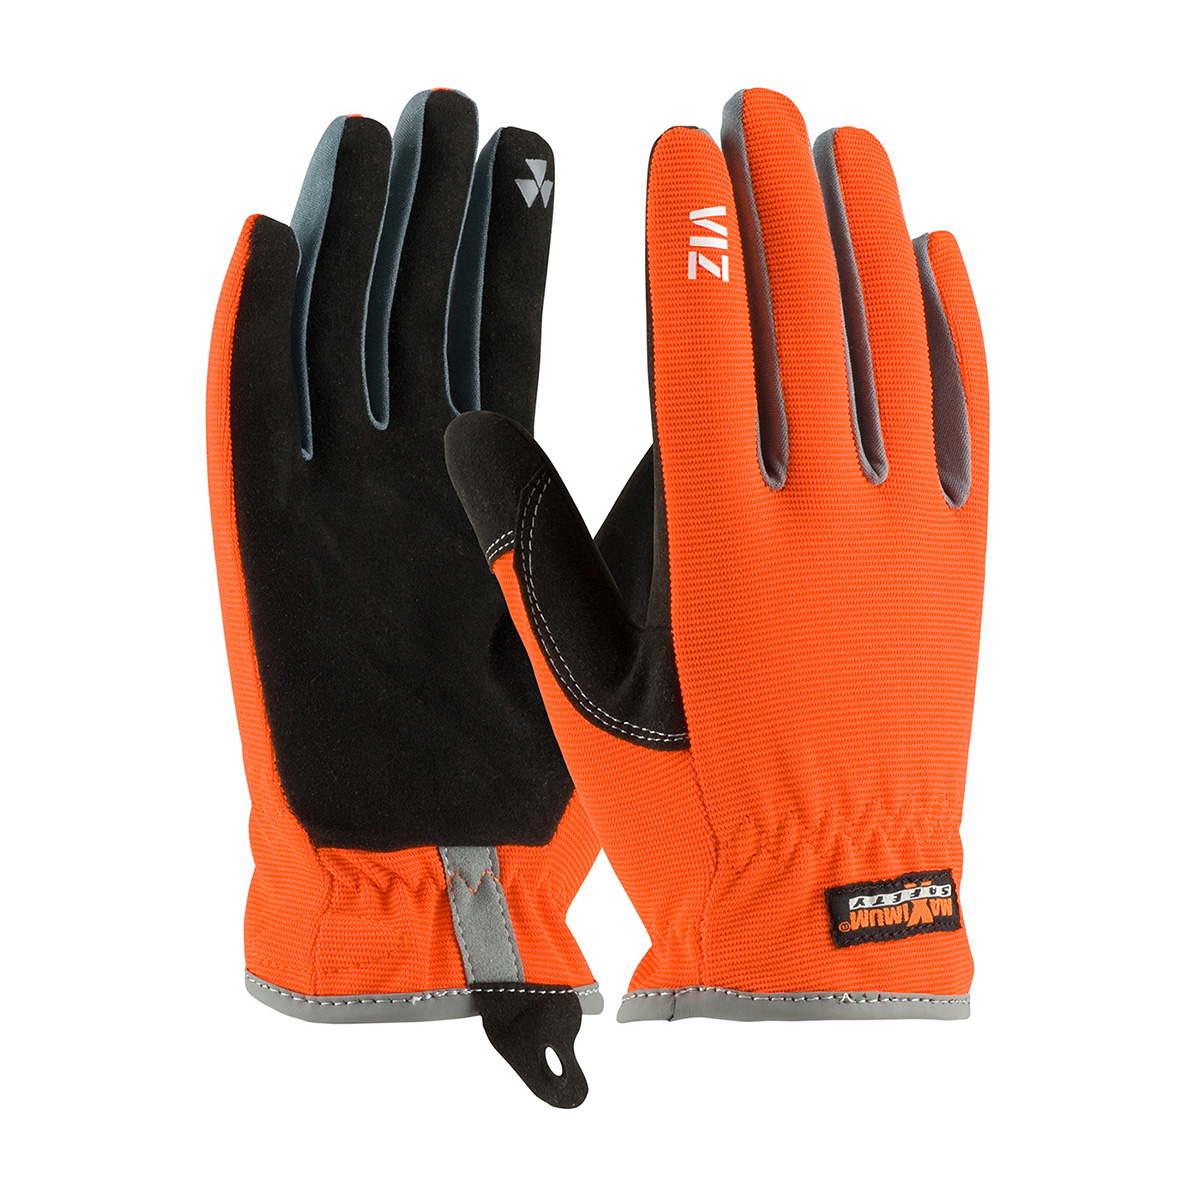 PIP Maximum Safety Leather Palm Yellow Mechanics Gloves